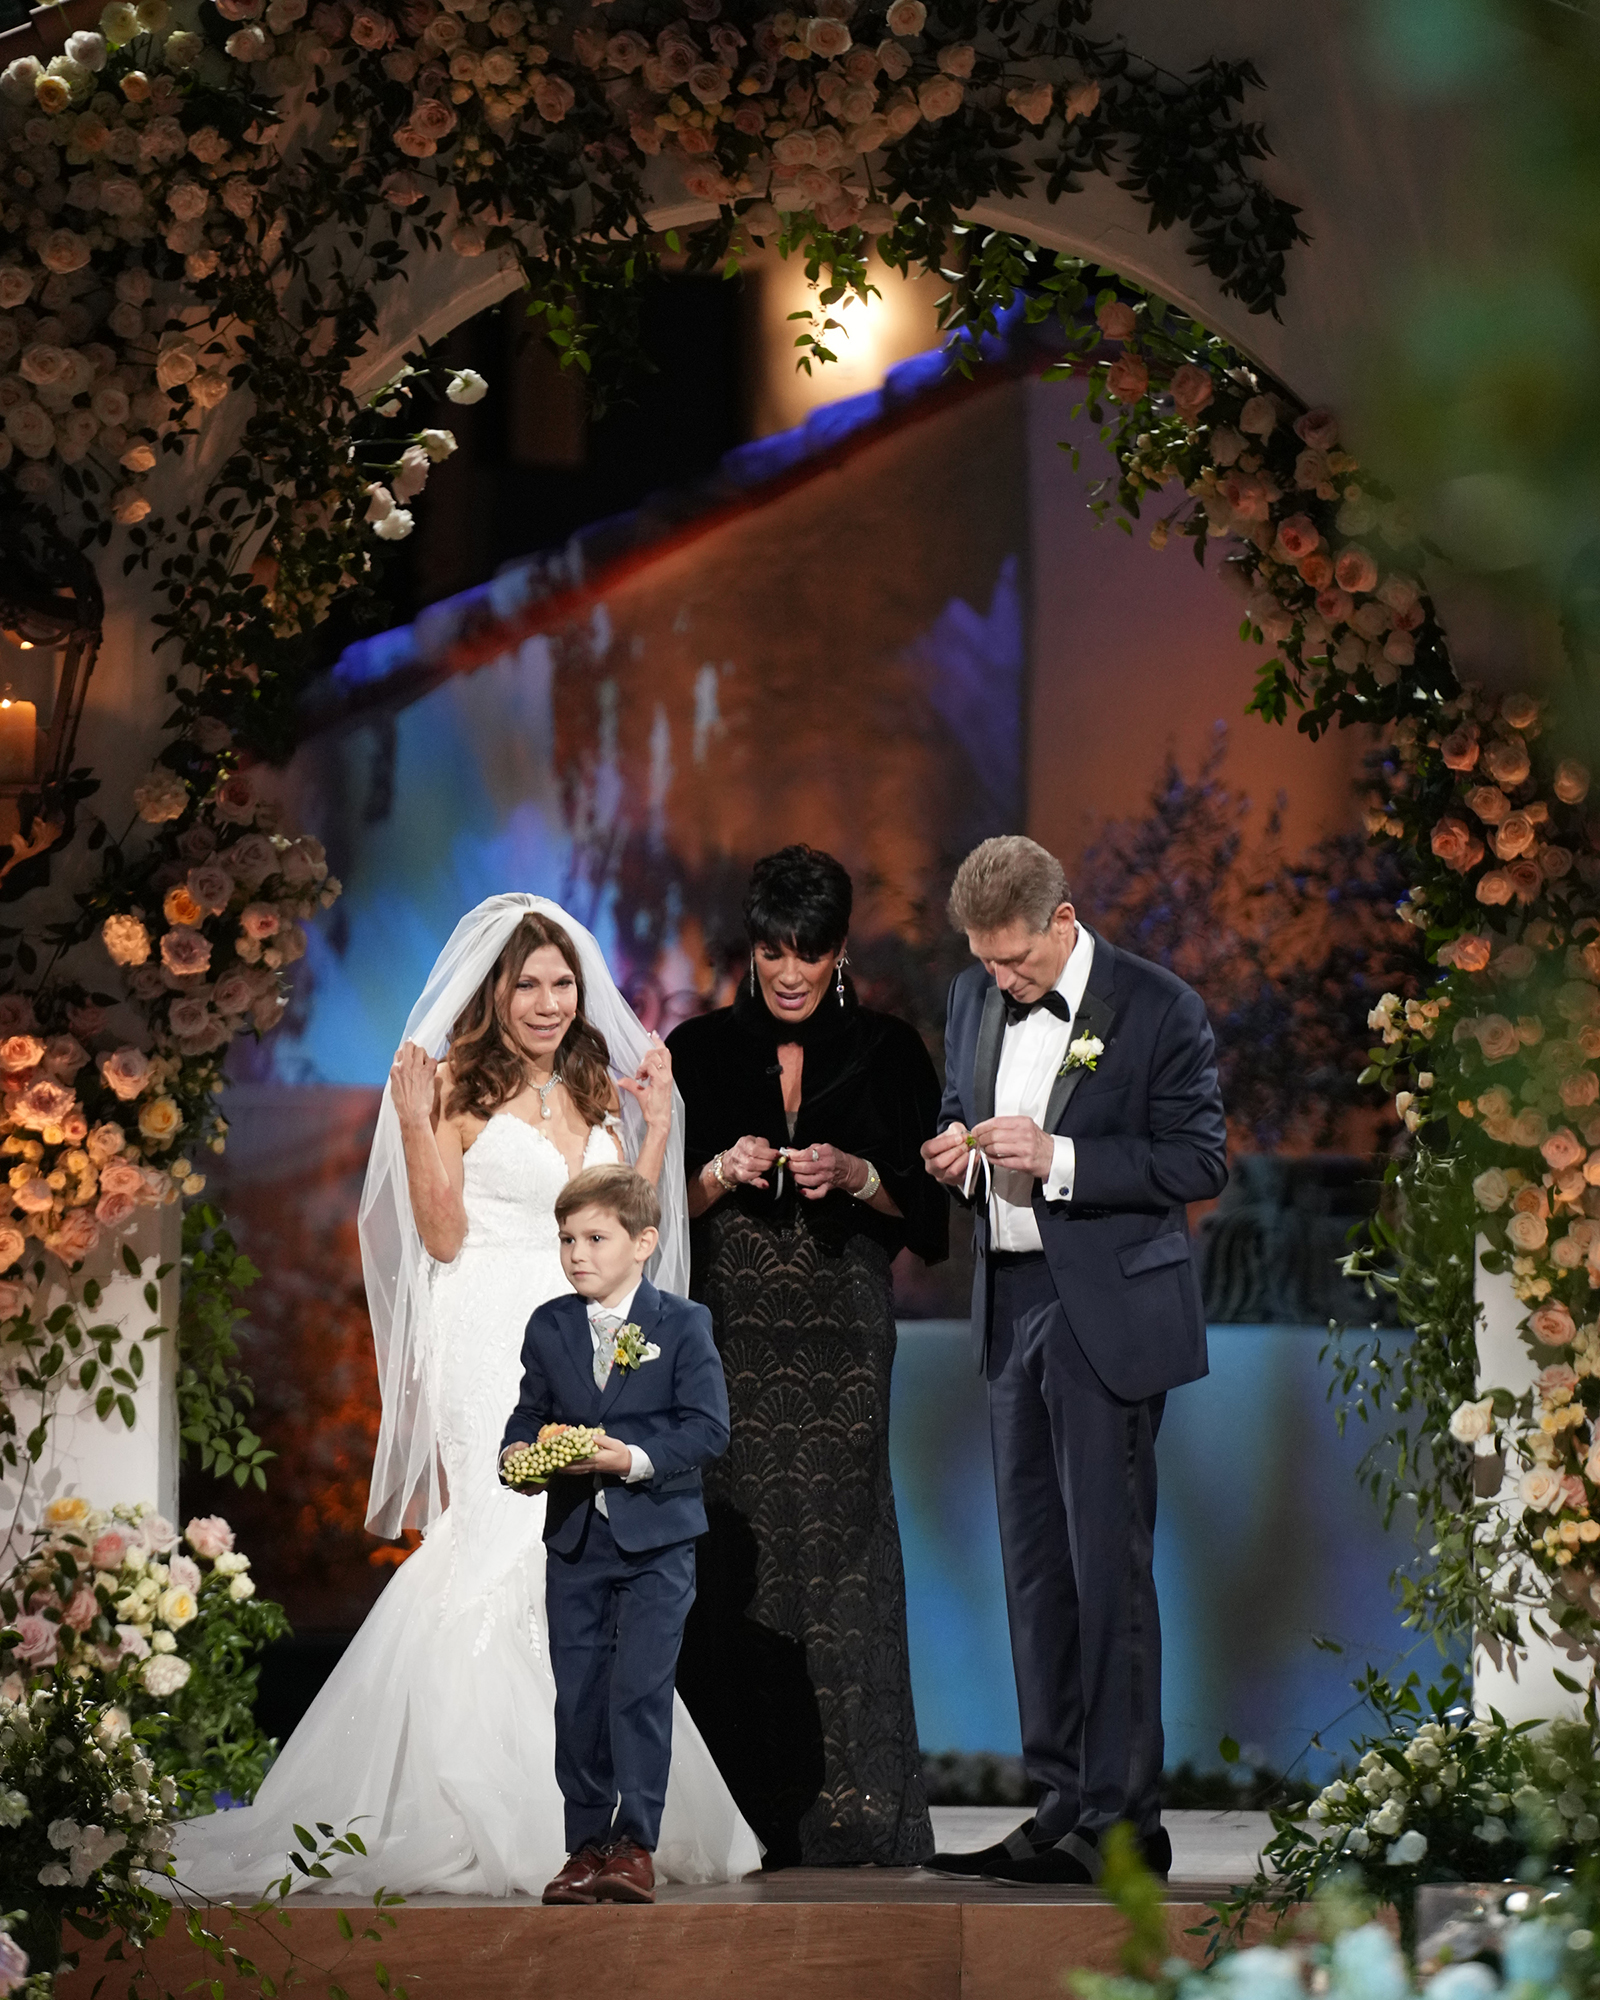 Bride Groom portrait photo album 2021 download - Free Wedding PSD